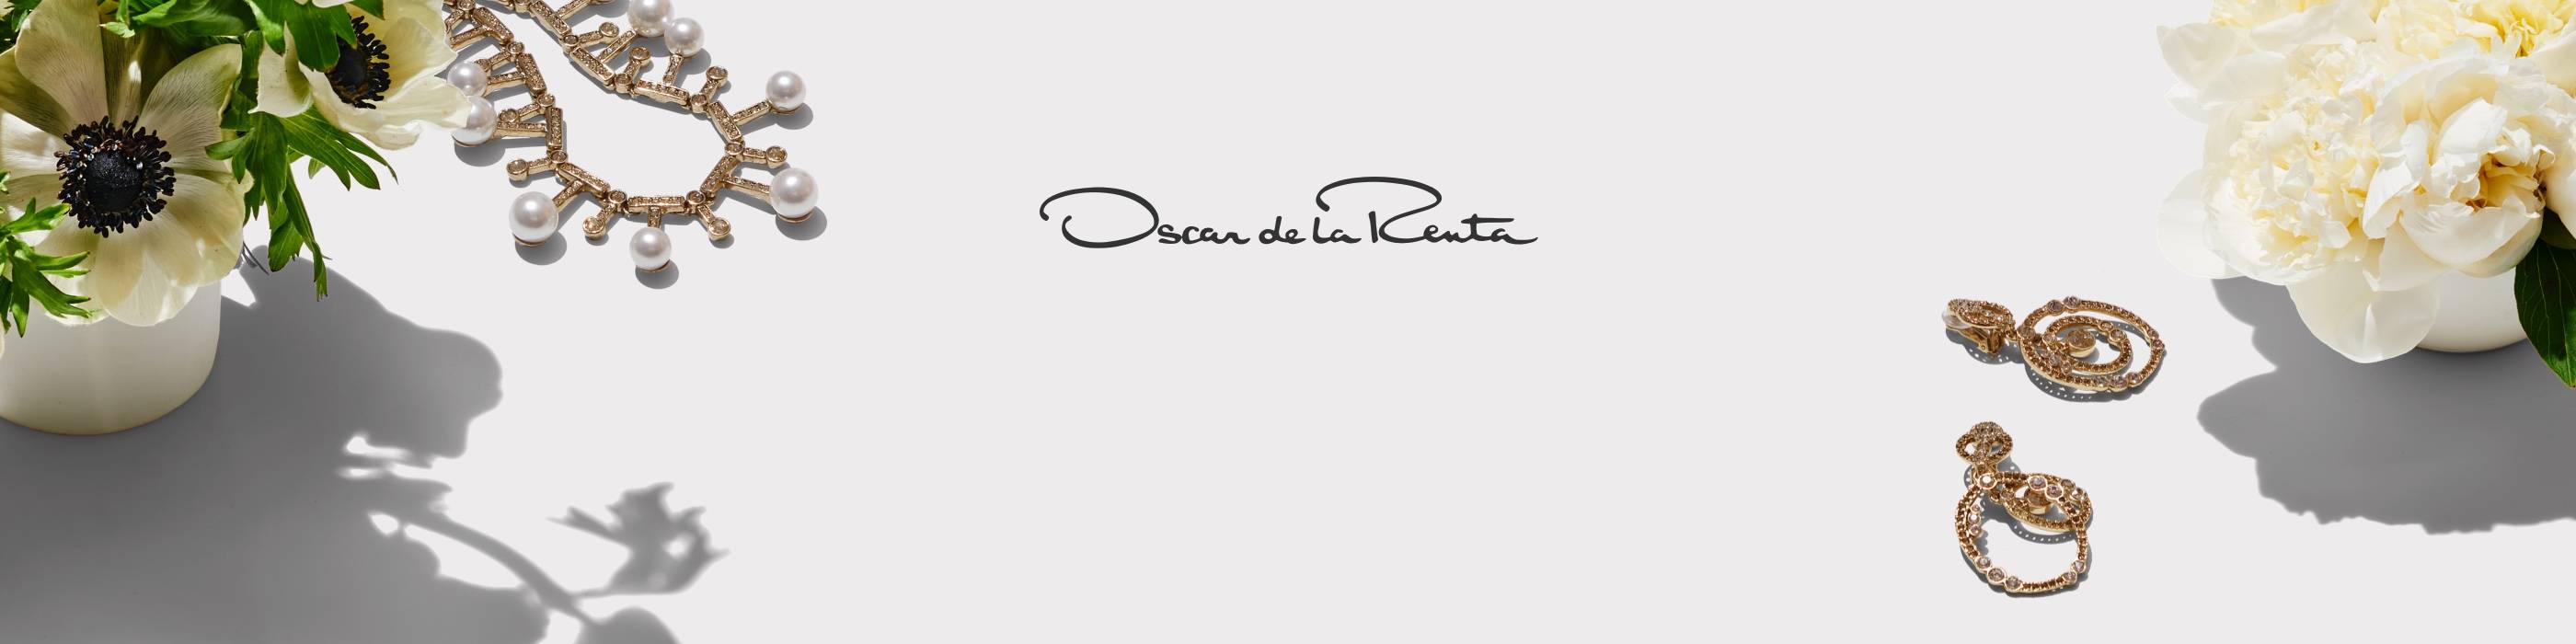 Oscar De La Renta Logo - Oscar de la Renta invitations and save the dates at